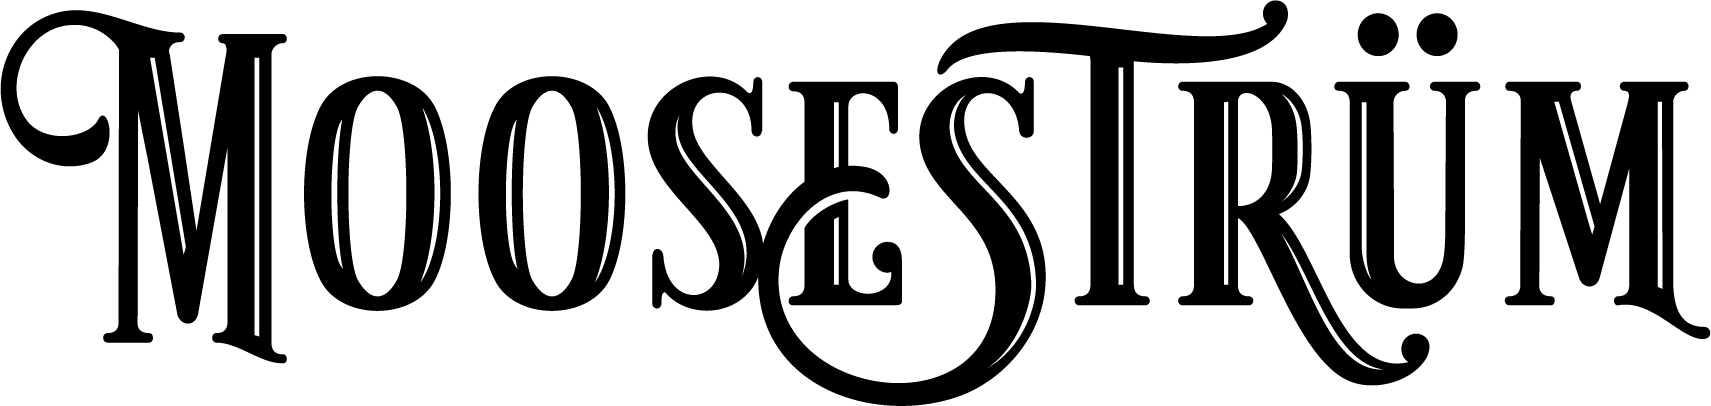 Moosestrum logo